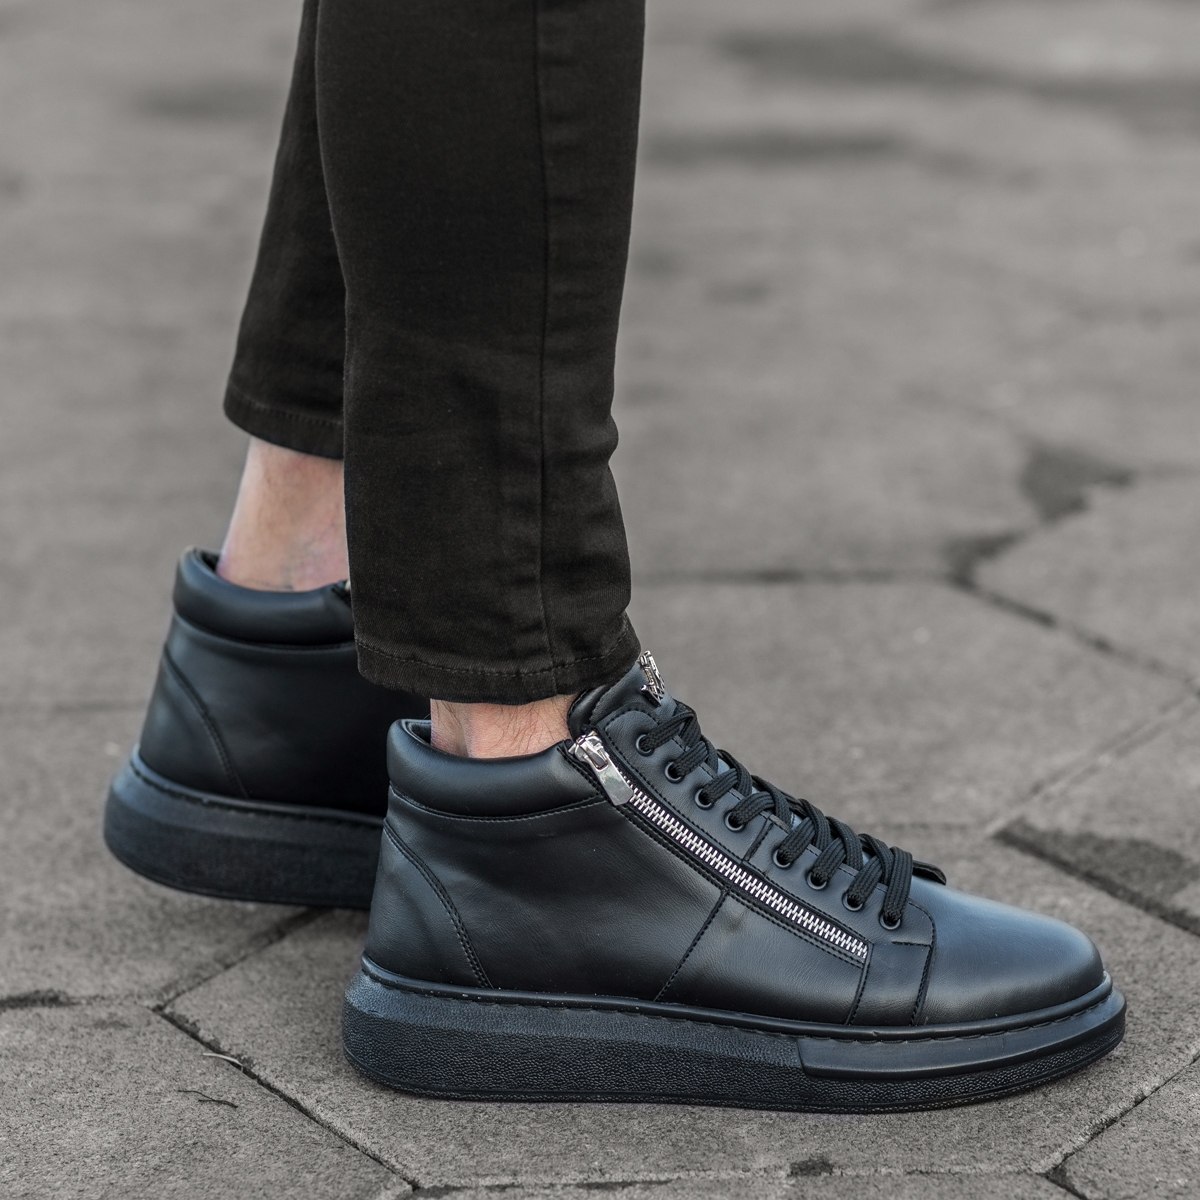 Herren High Top Sneakers Designer Schuhe mit Reissverschluss in schwarz | Martin Valen